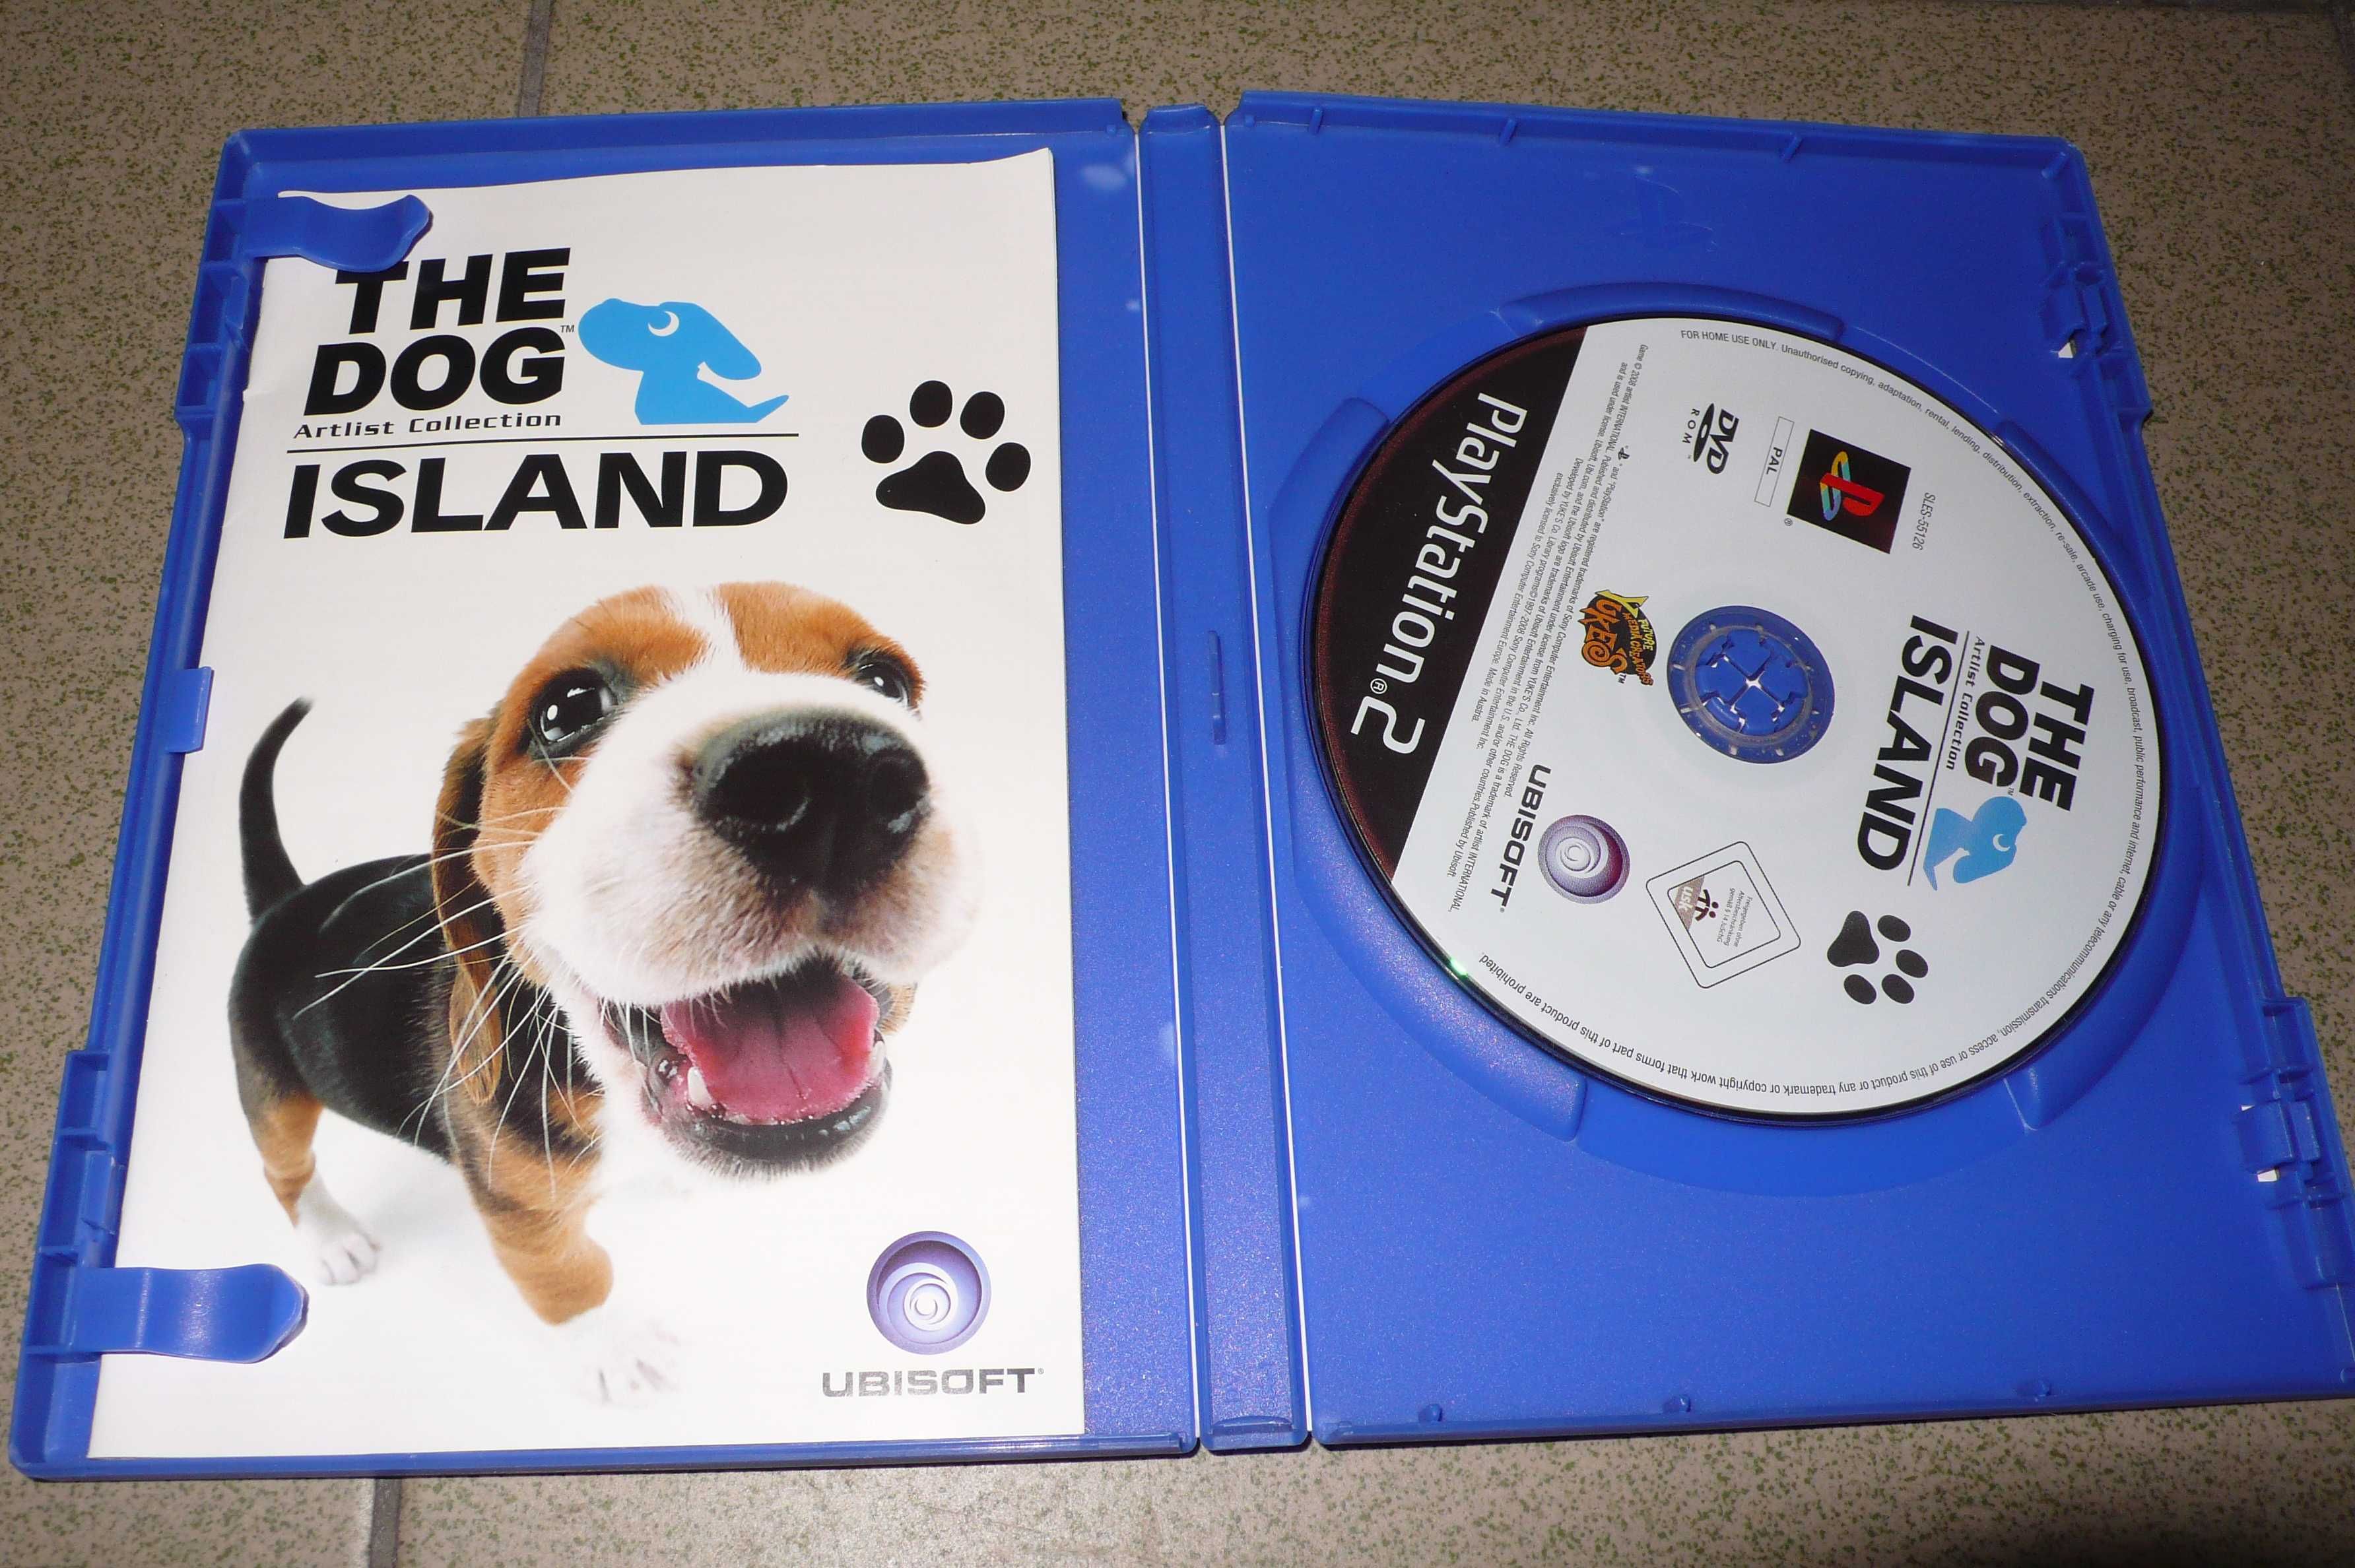 Artlist Collection : The Dog Island na PS2 Playstation 2 dla dzieci